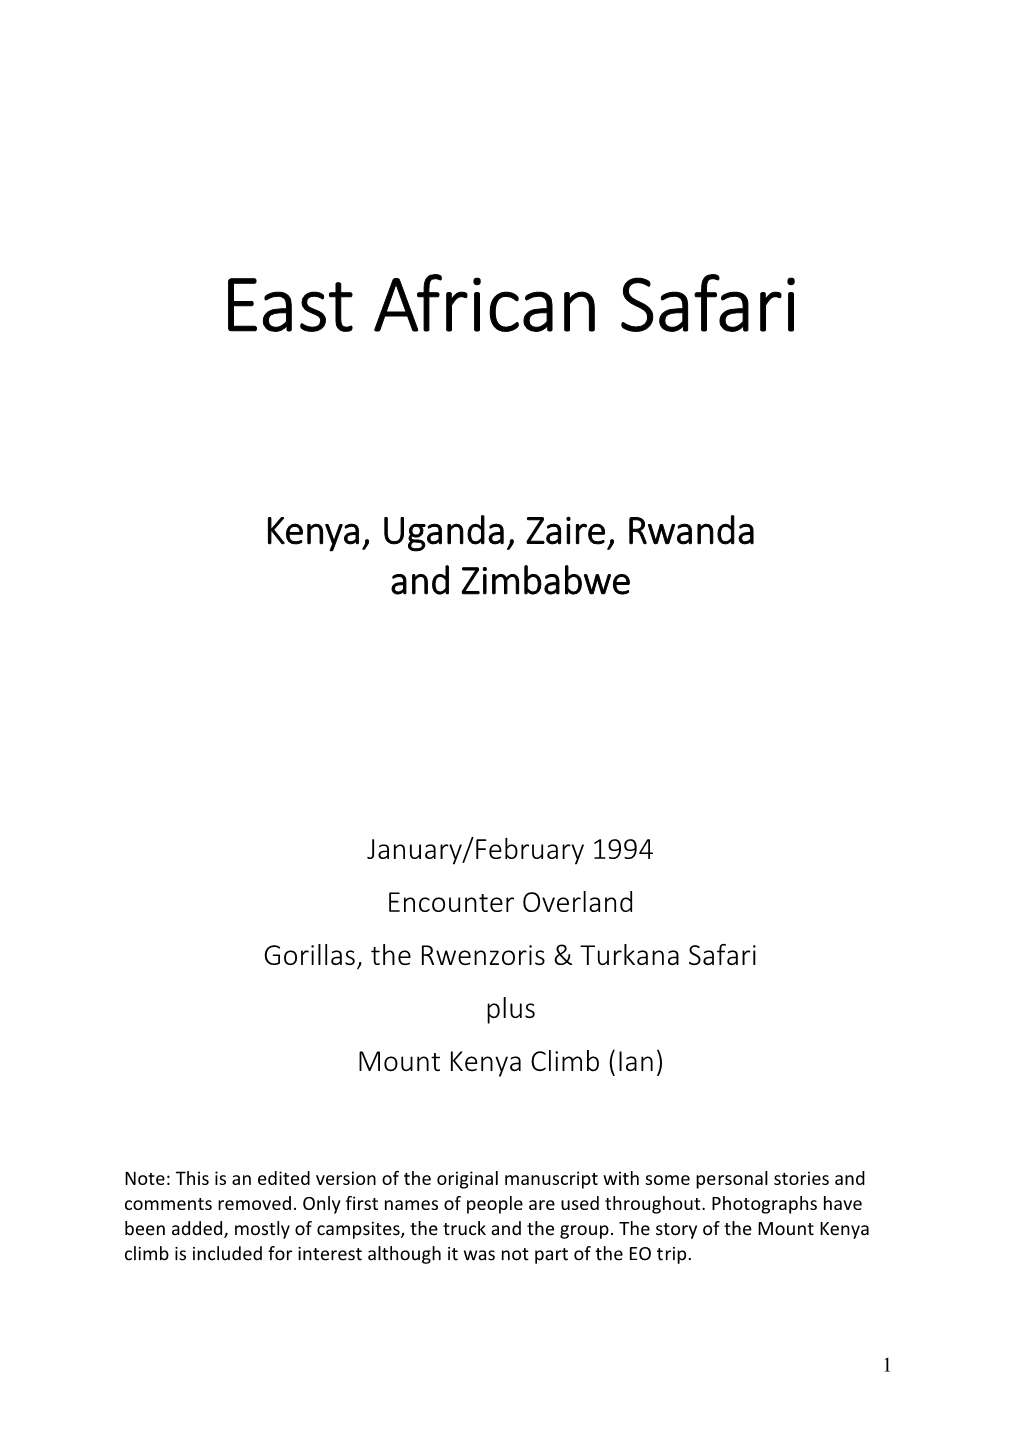 East African Safari January 1994